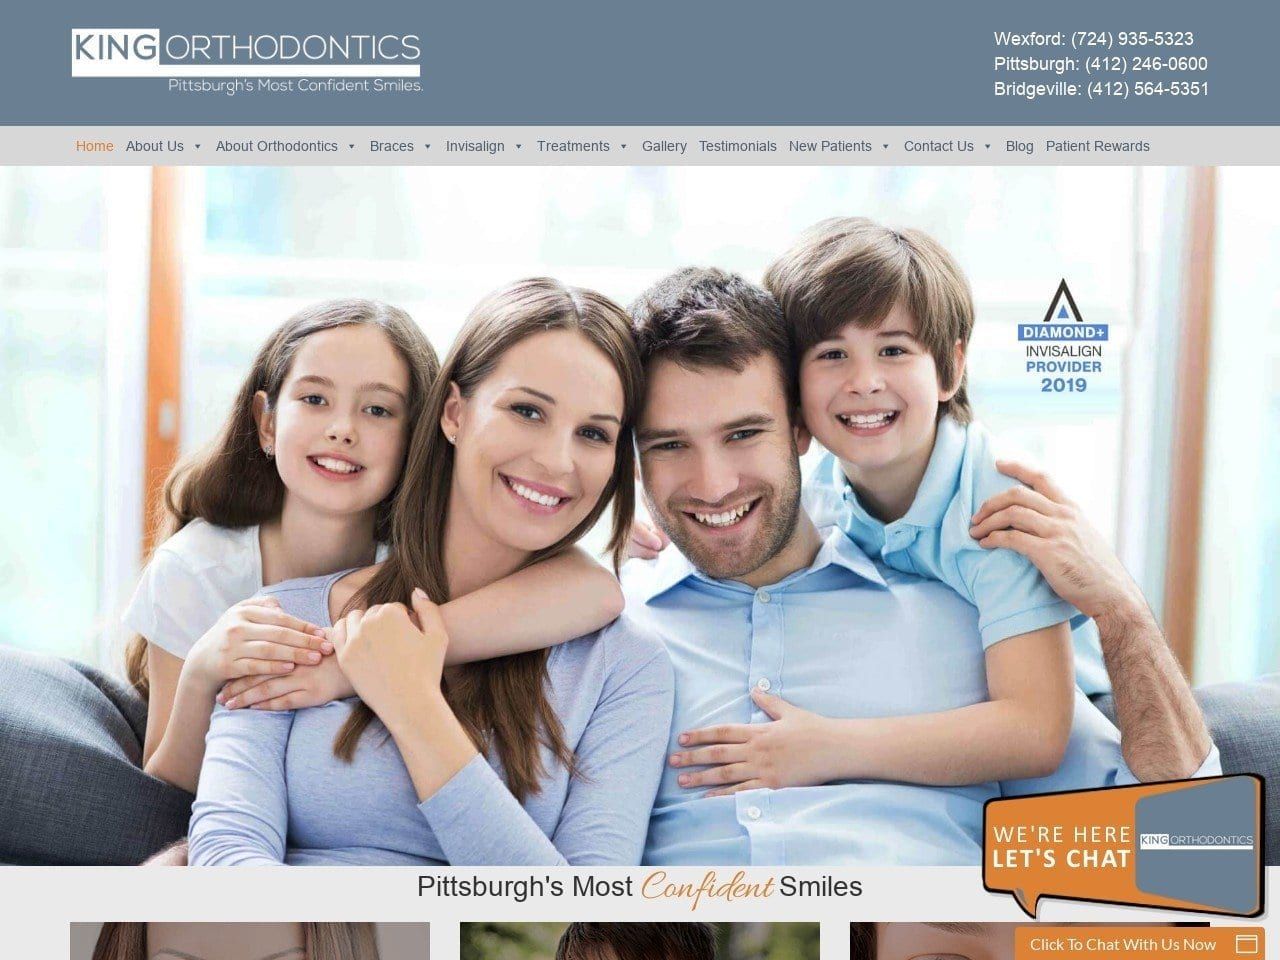 King Orthodontics Website Screenshot from kingorthodontics.com